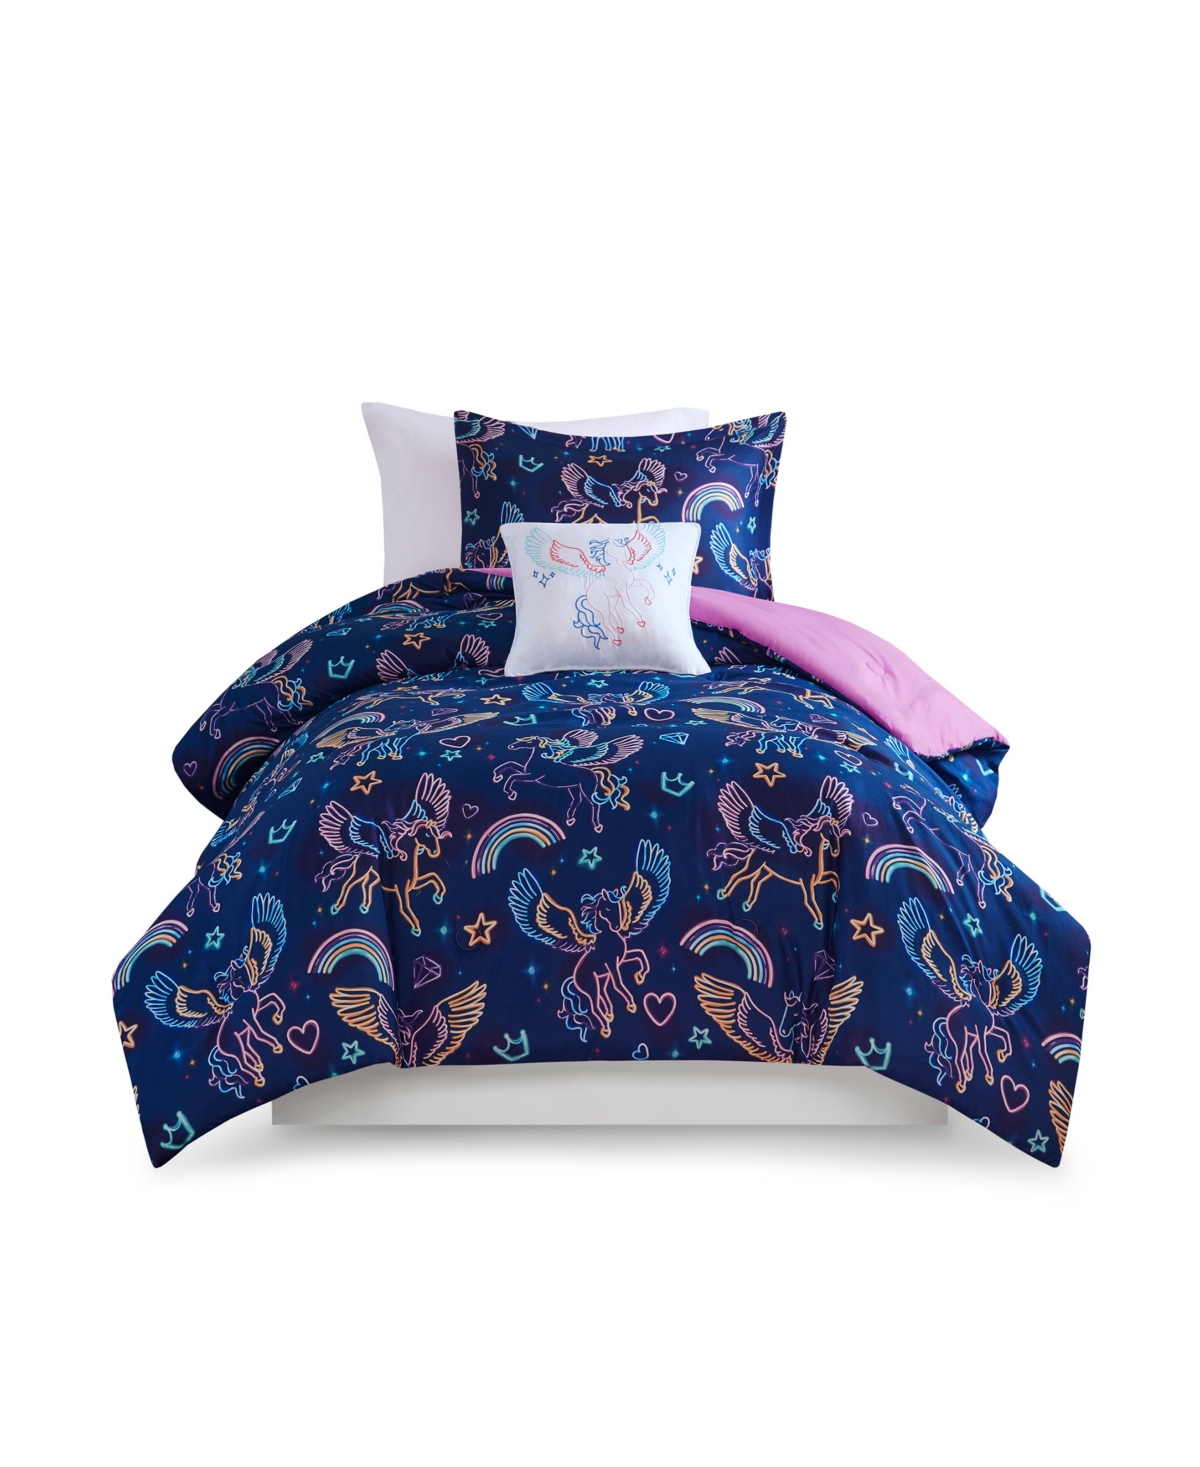 Mi Zone Kids Leora Pegasus Printed Comforter Set, Full/queen, 4 Piece Bedding In Blue